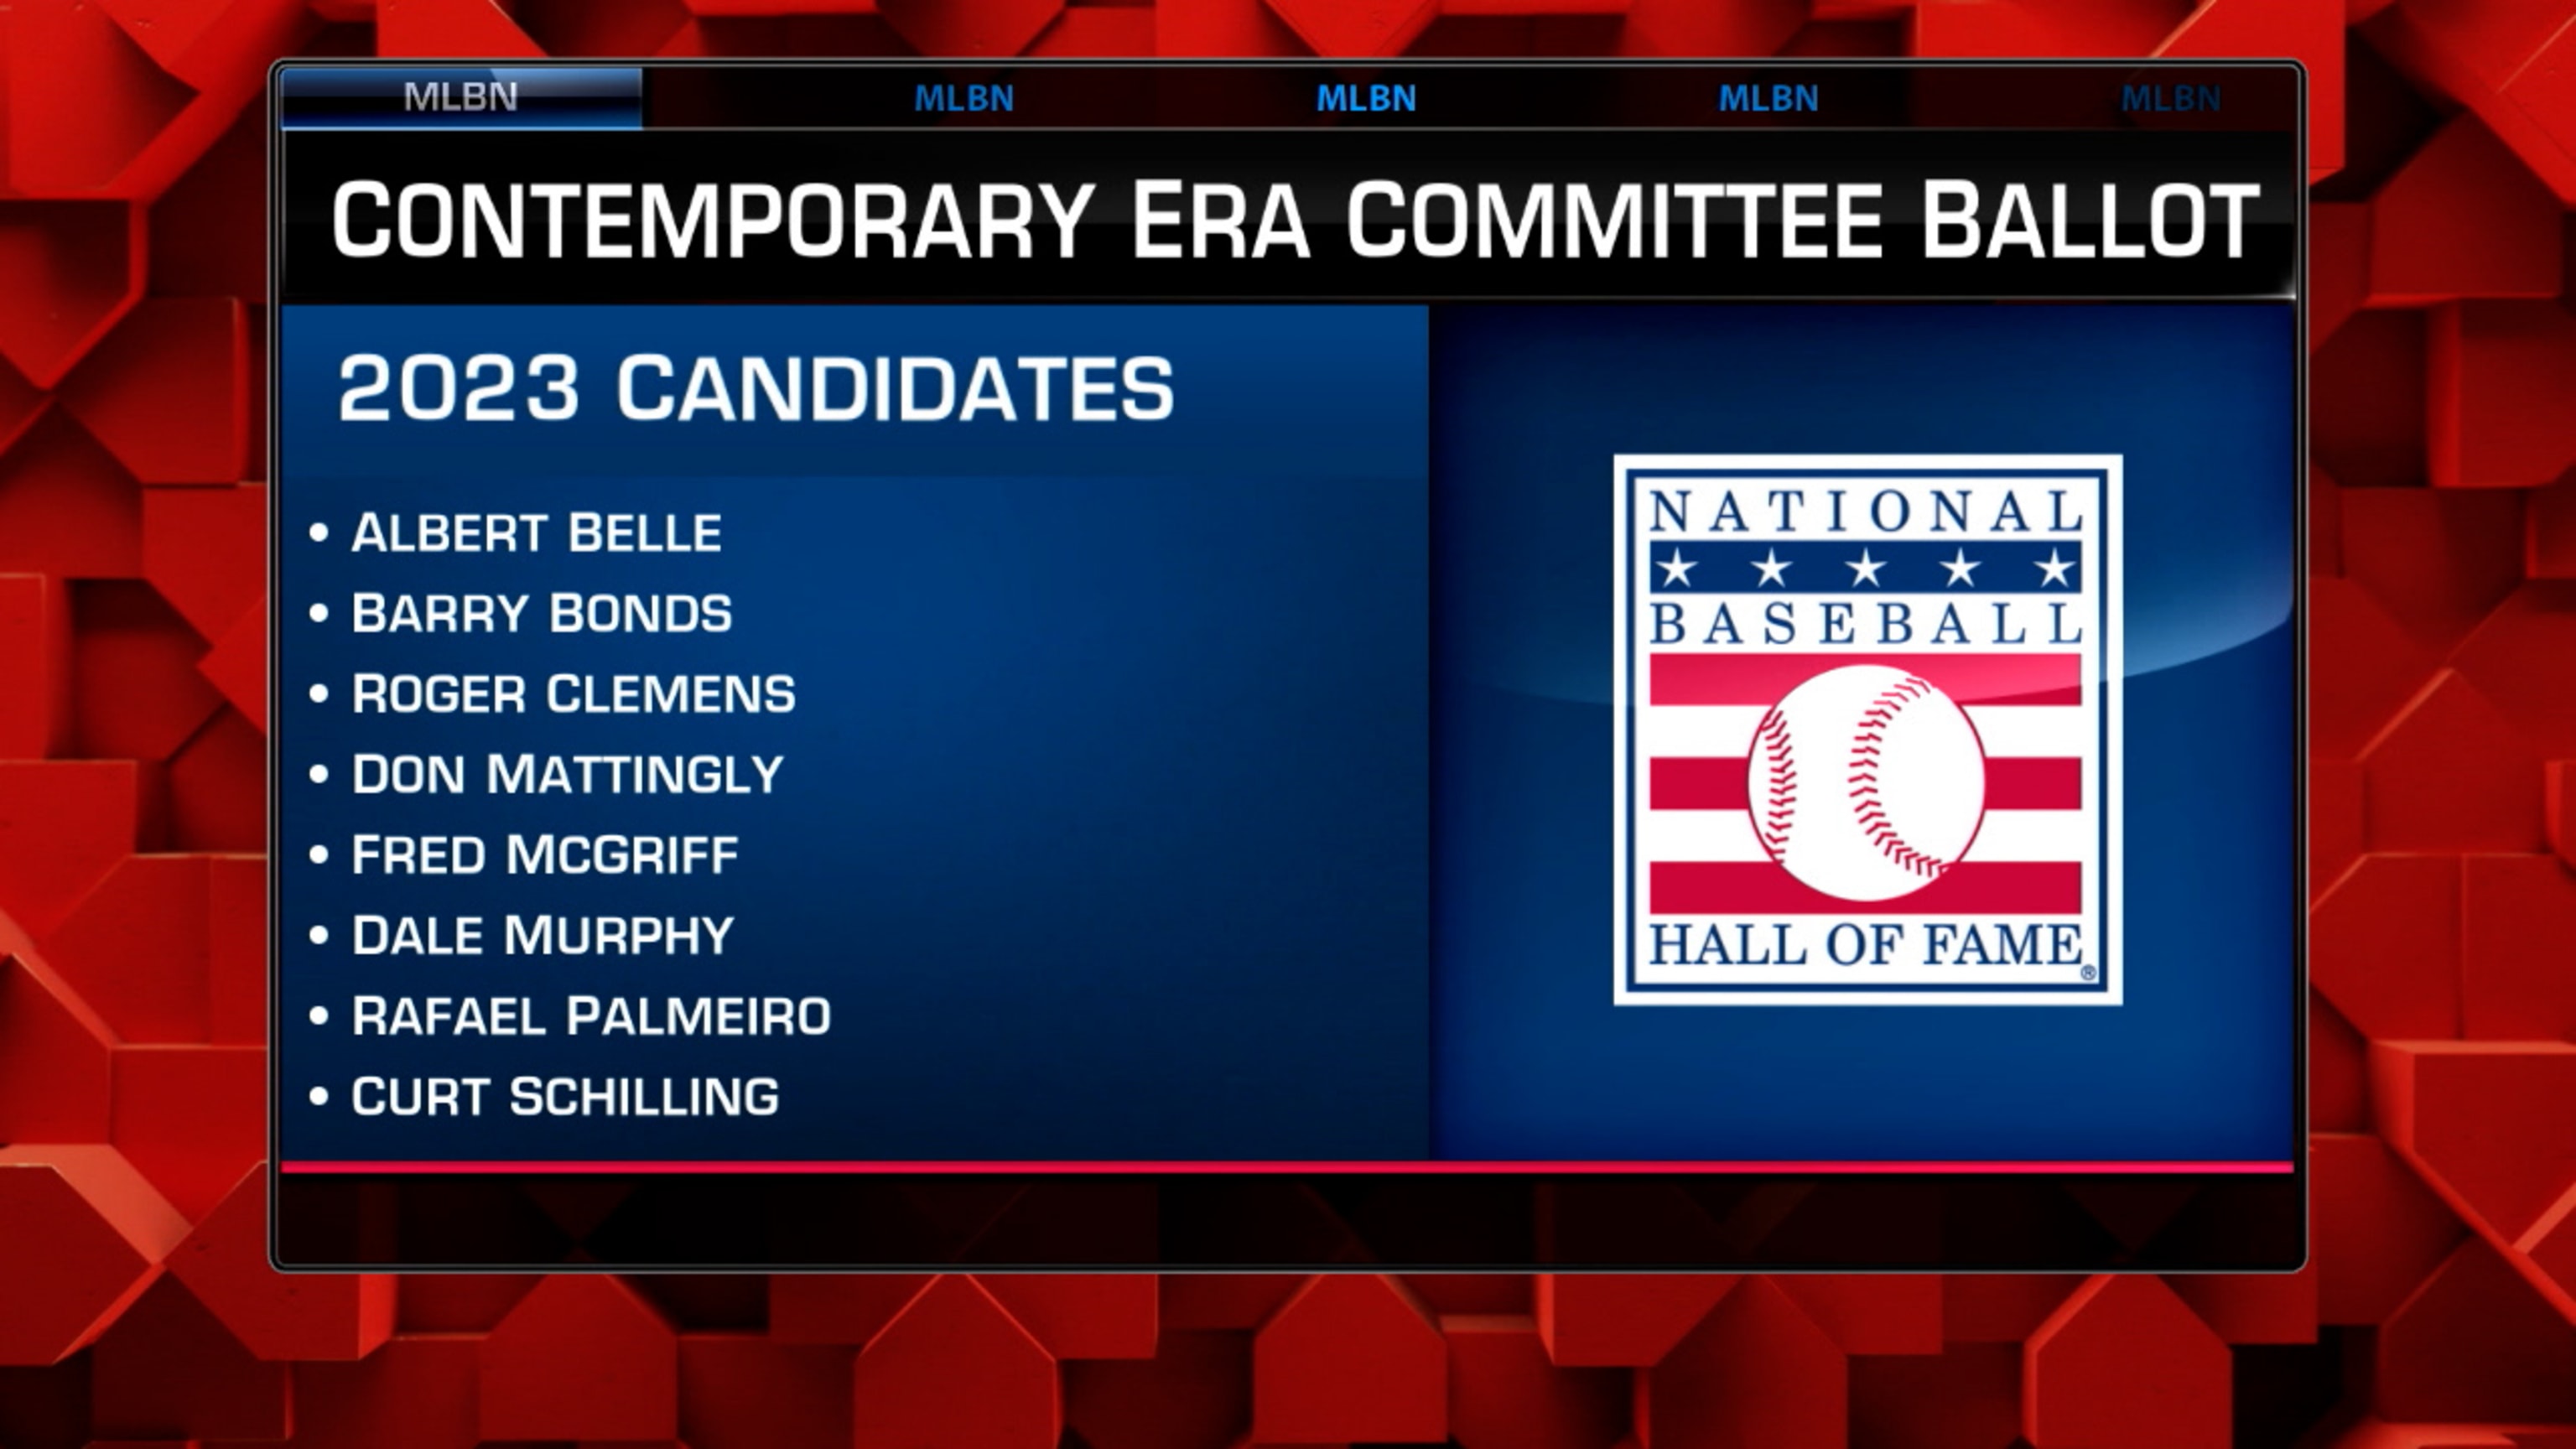 2023 Contemporary Baseball Era Committee Candidate: Don Mattingly